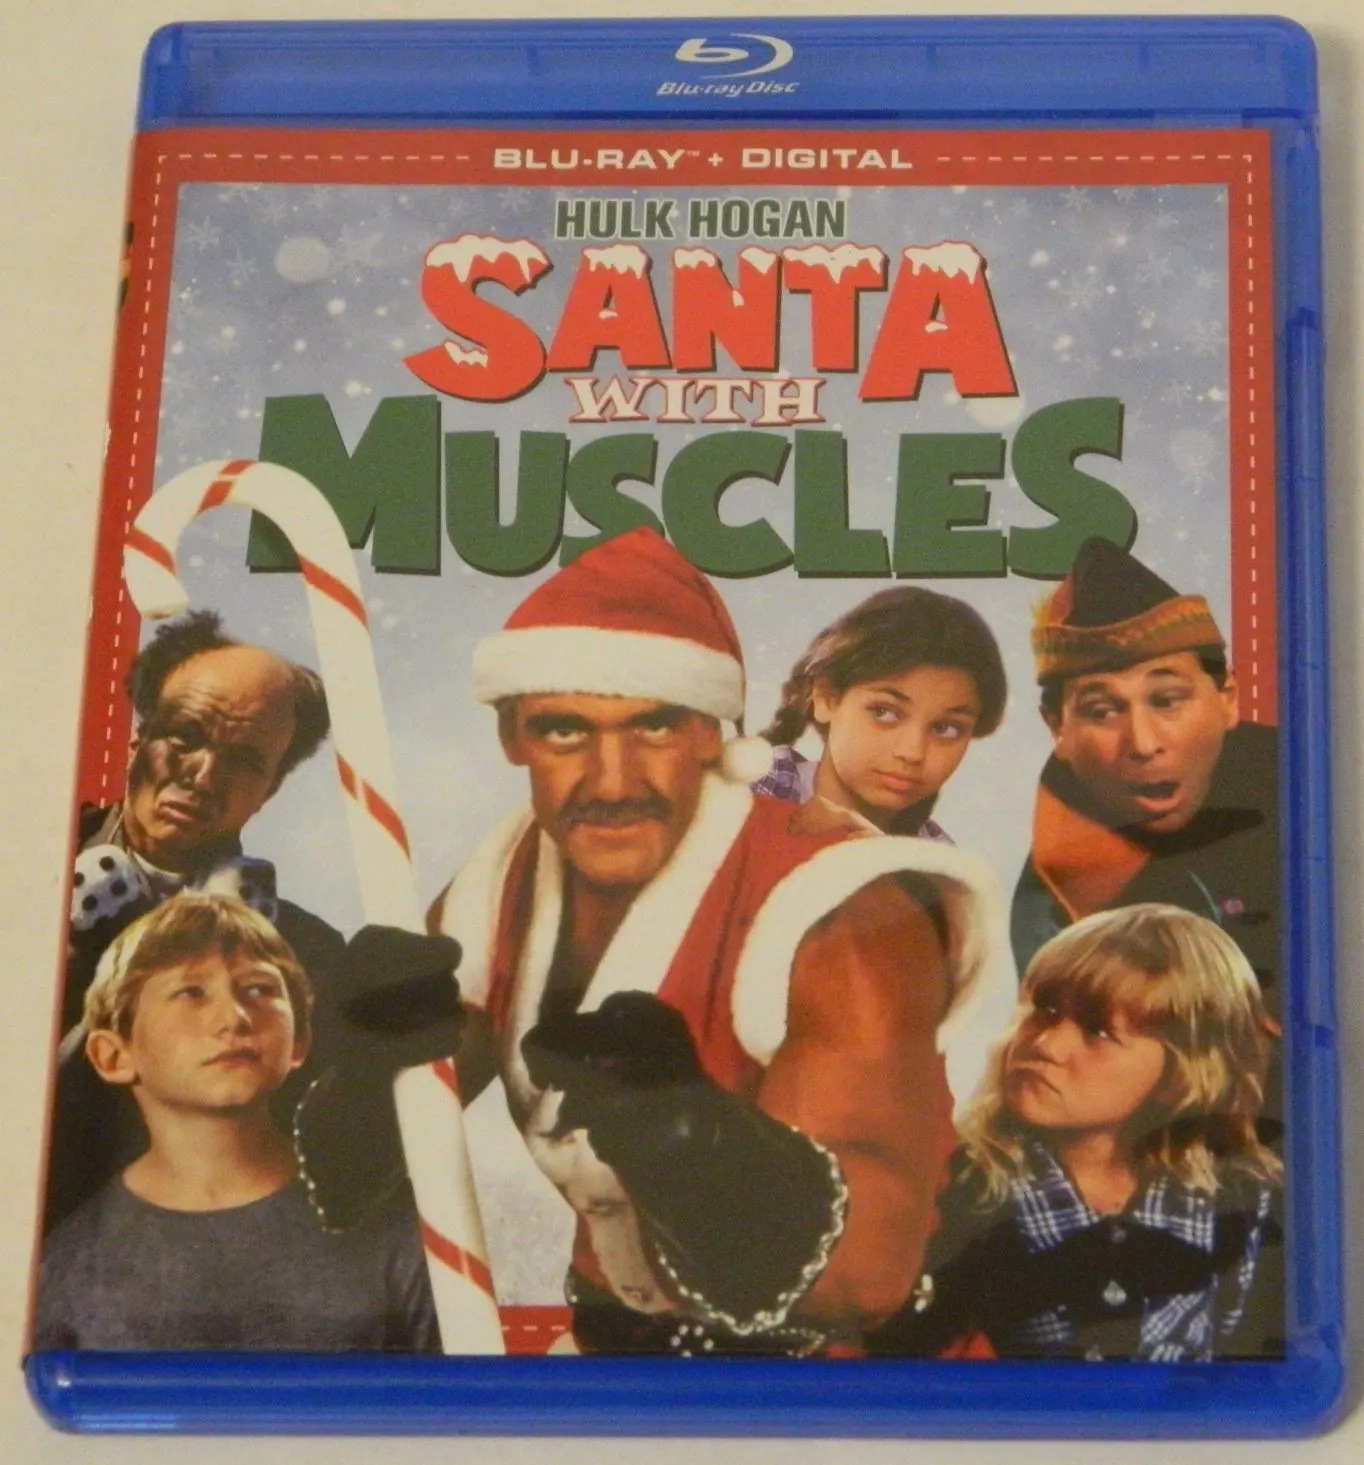 https://www.geekyhobbies.com/wp-content/uploads/2019/12/Santa-With-Muscles-Blu-ray.jpg.webp